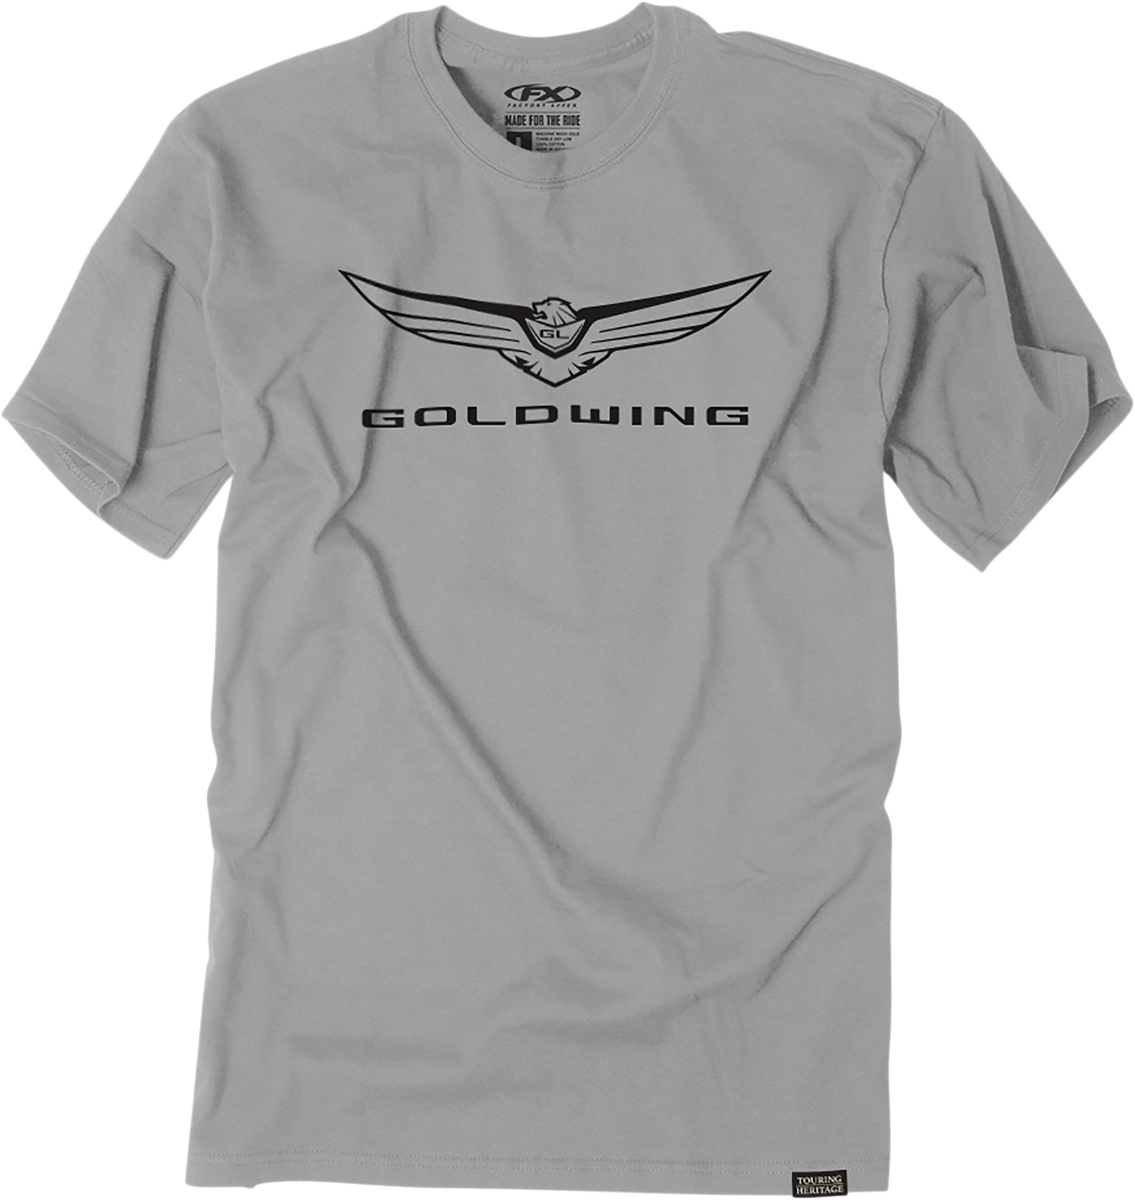 FACTORY EFFEX Goldwing Icon T-Shirt - Gray - Medium 25-87802